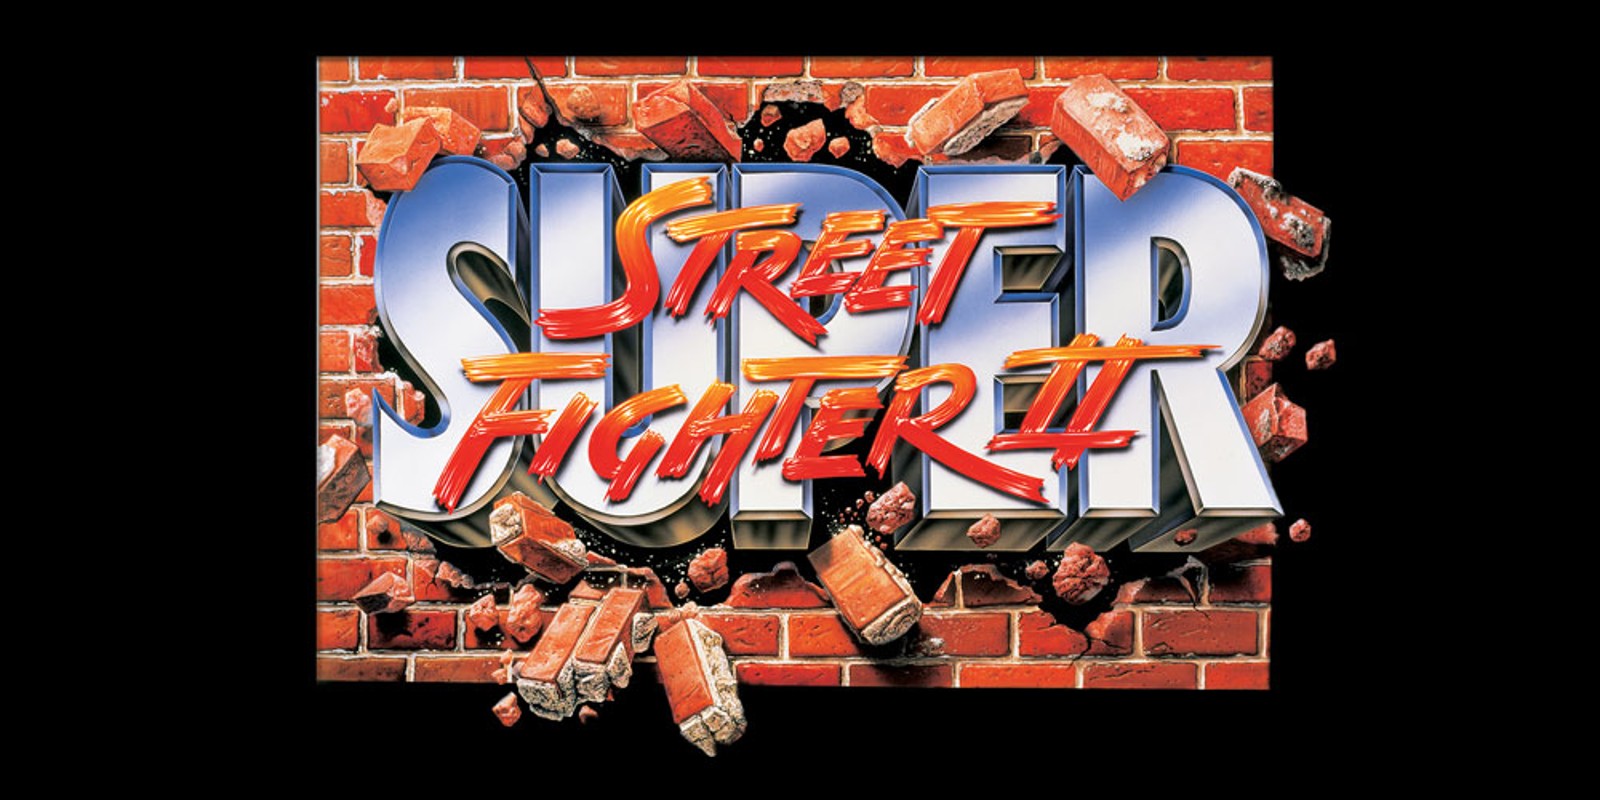 Super Street Fighter™ II: The New Challengers